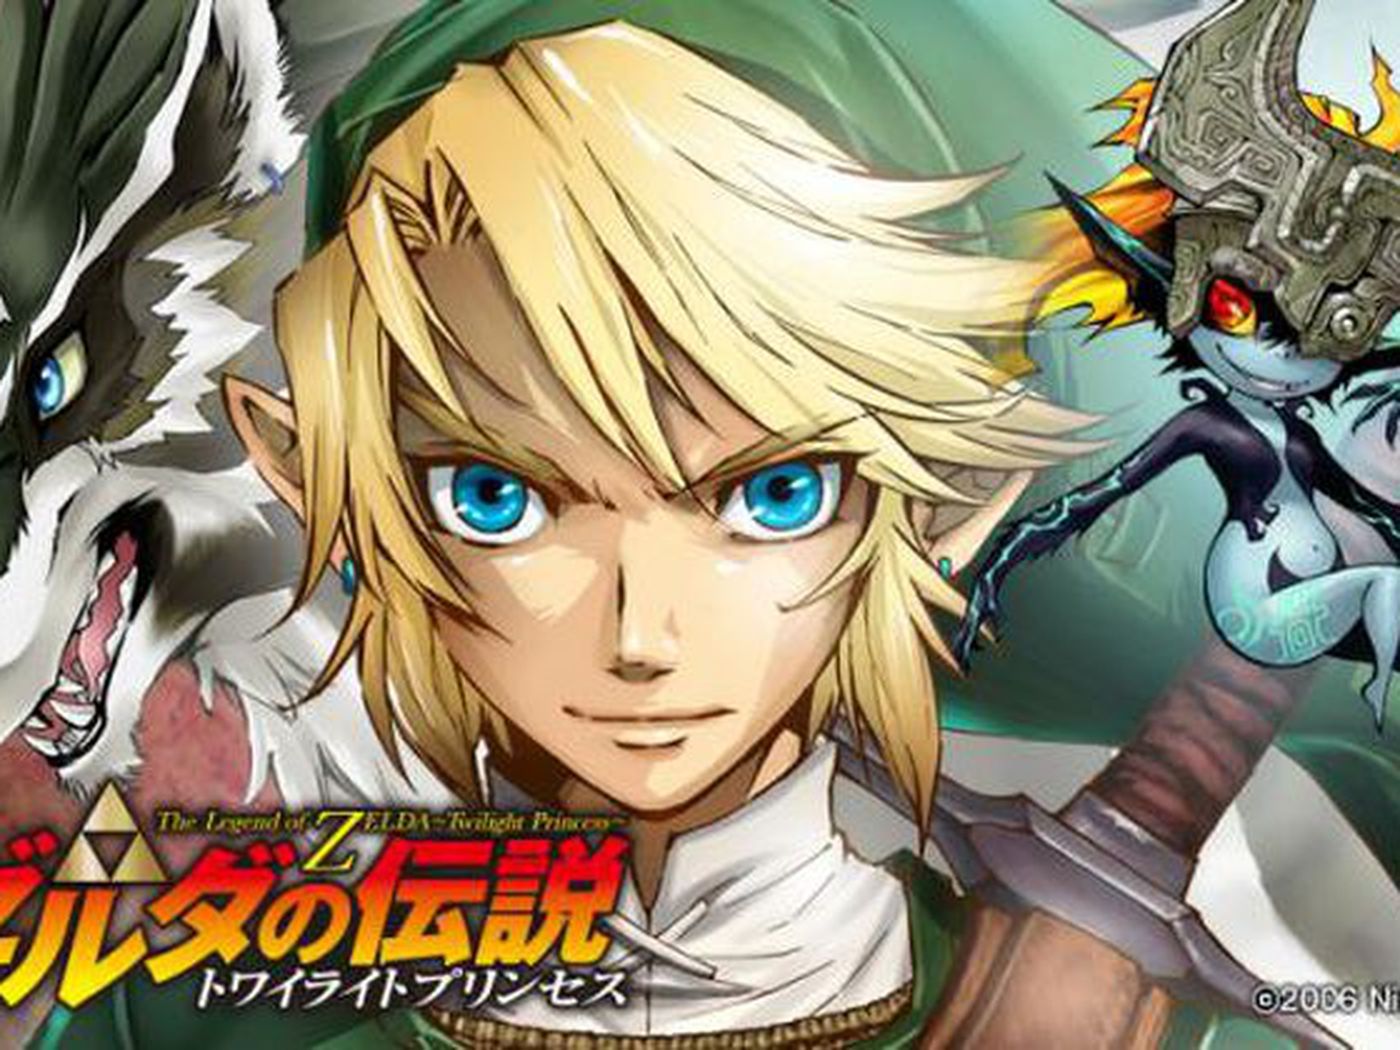 The Legend of Zelda: Twilight Princess is getting a manga, starting next week